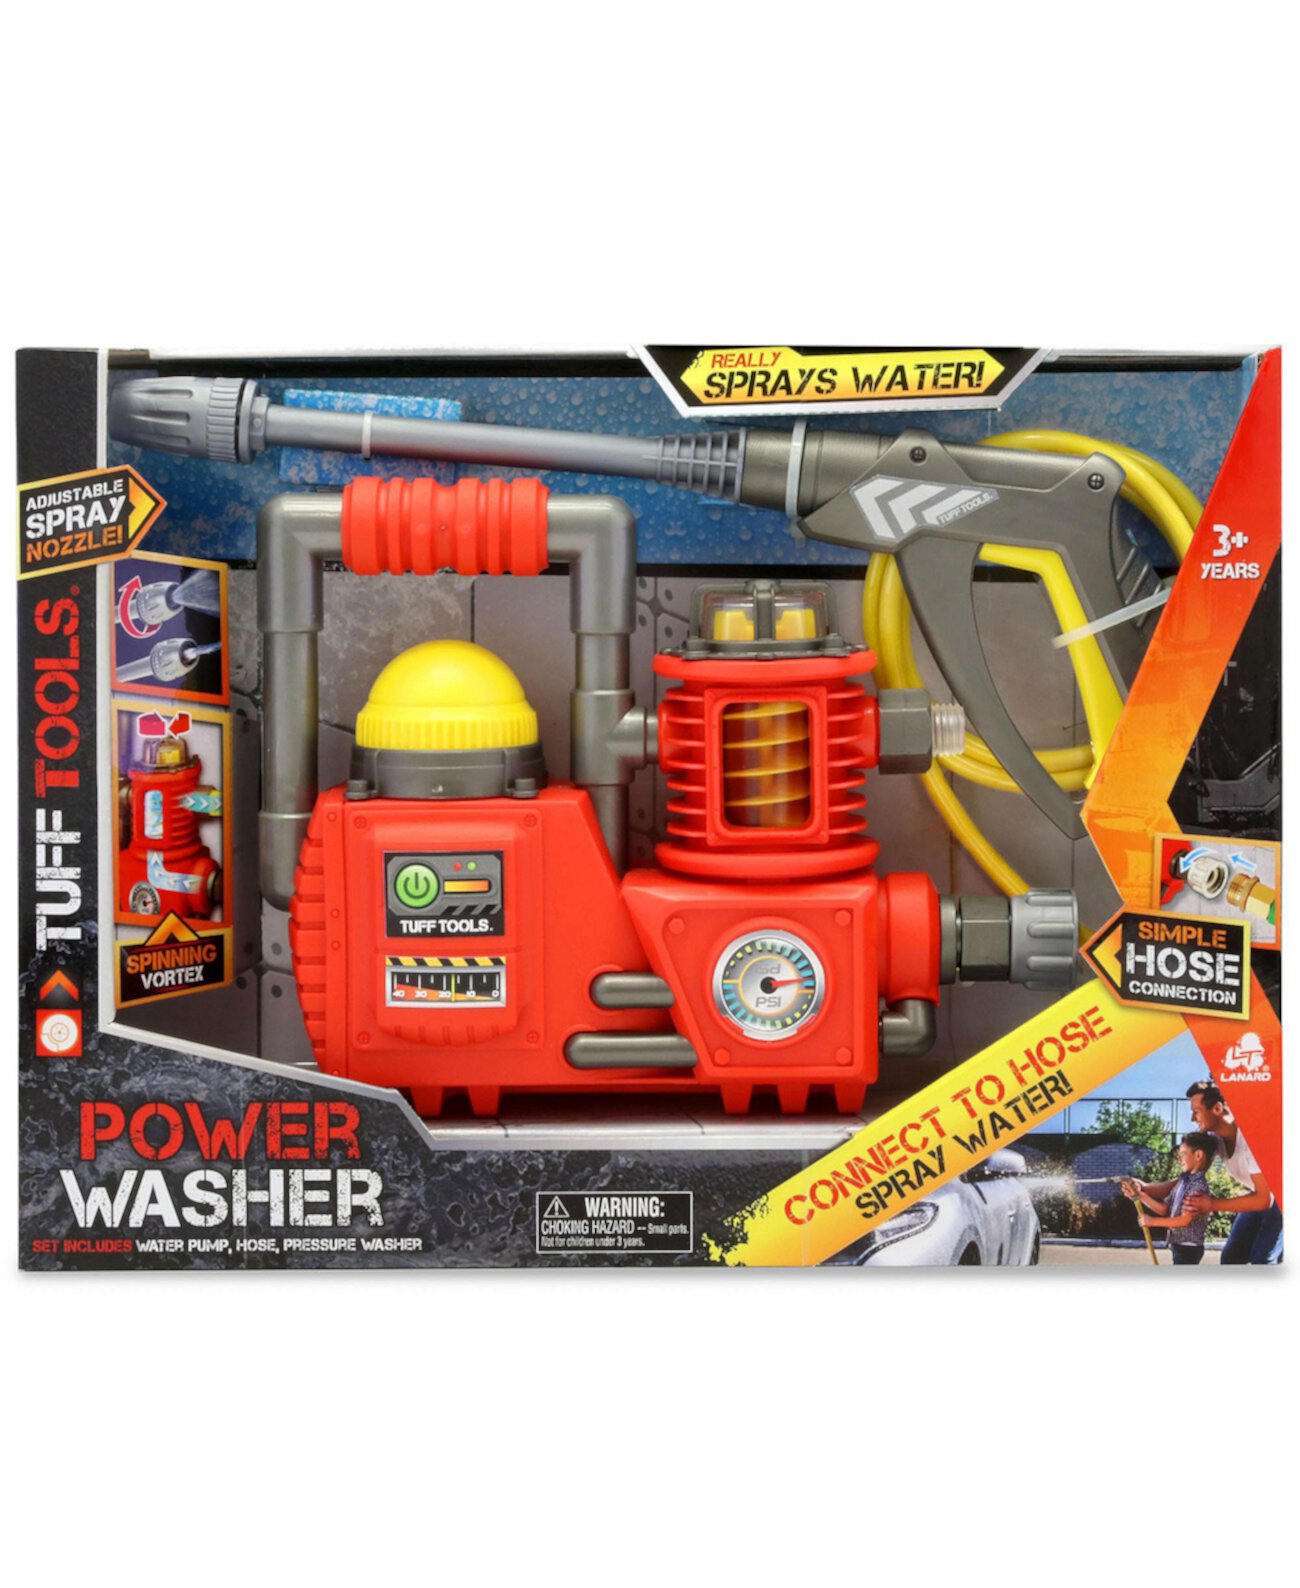 Tuff Tools Power Washer Kids Tool Toy Hose Connecting Sprays Water, Set of 3 Lanard